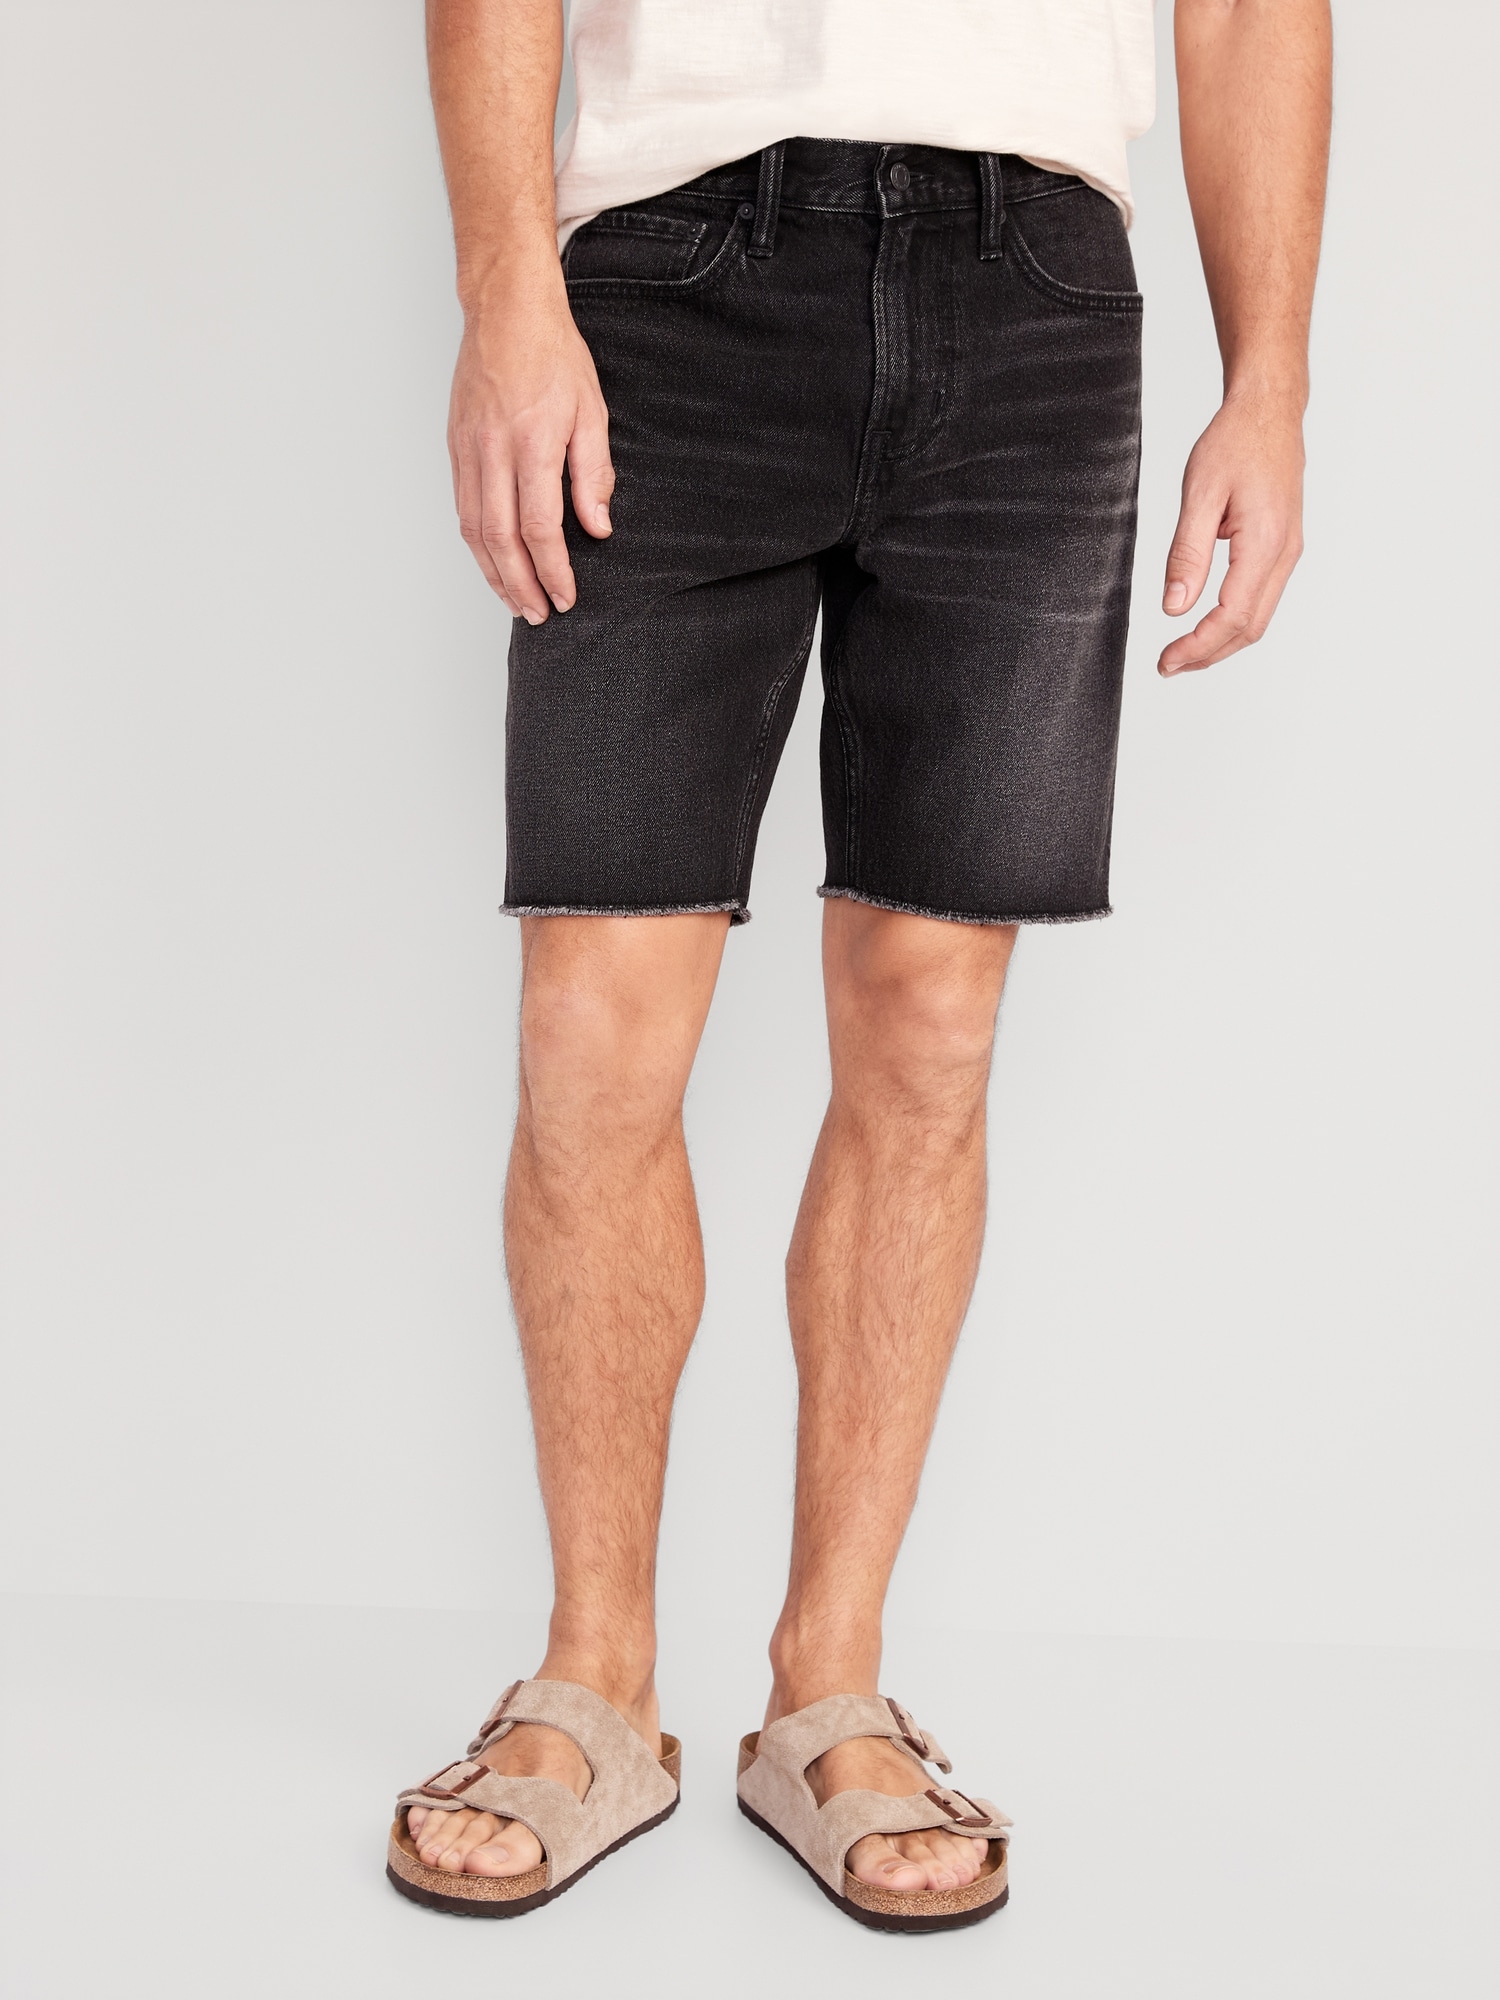 Slim Built-In Flex Black Cut-Off Jean Shorts -- 9.5-inch inseam